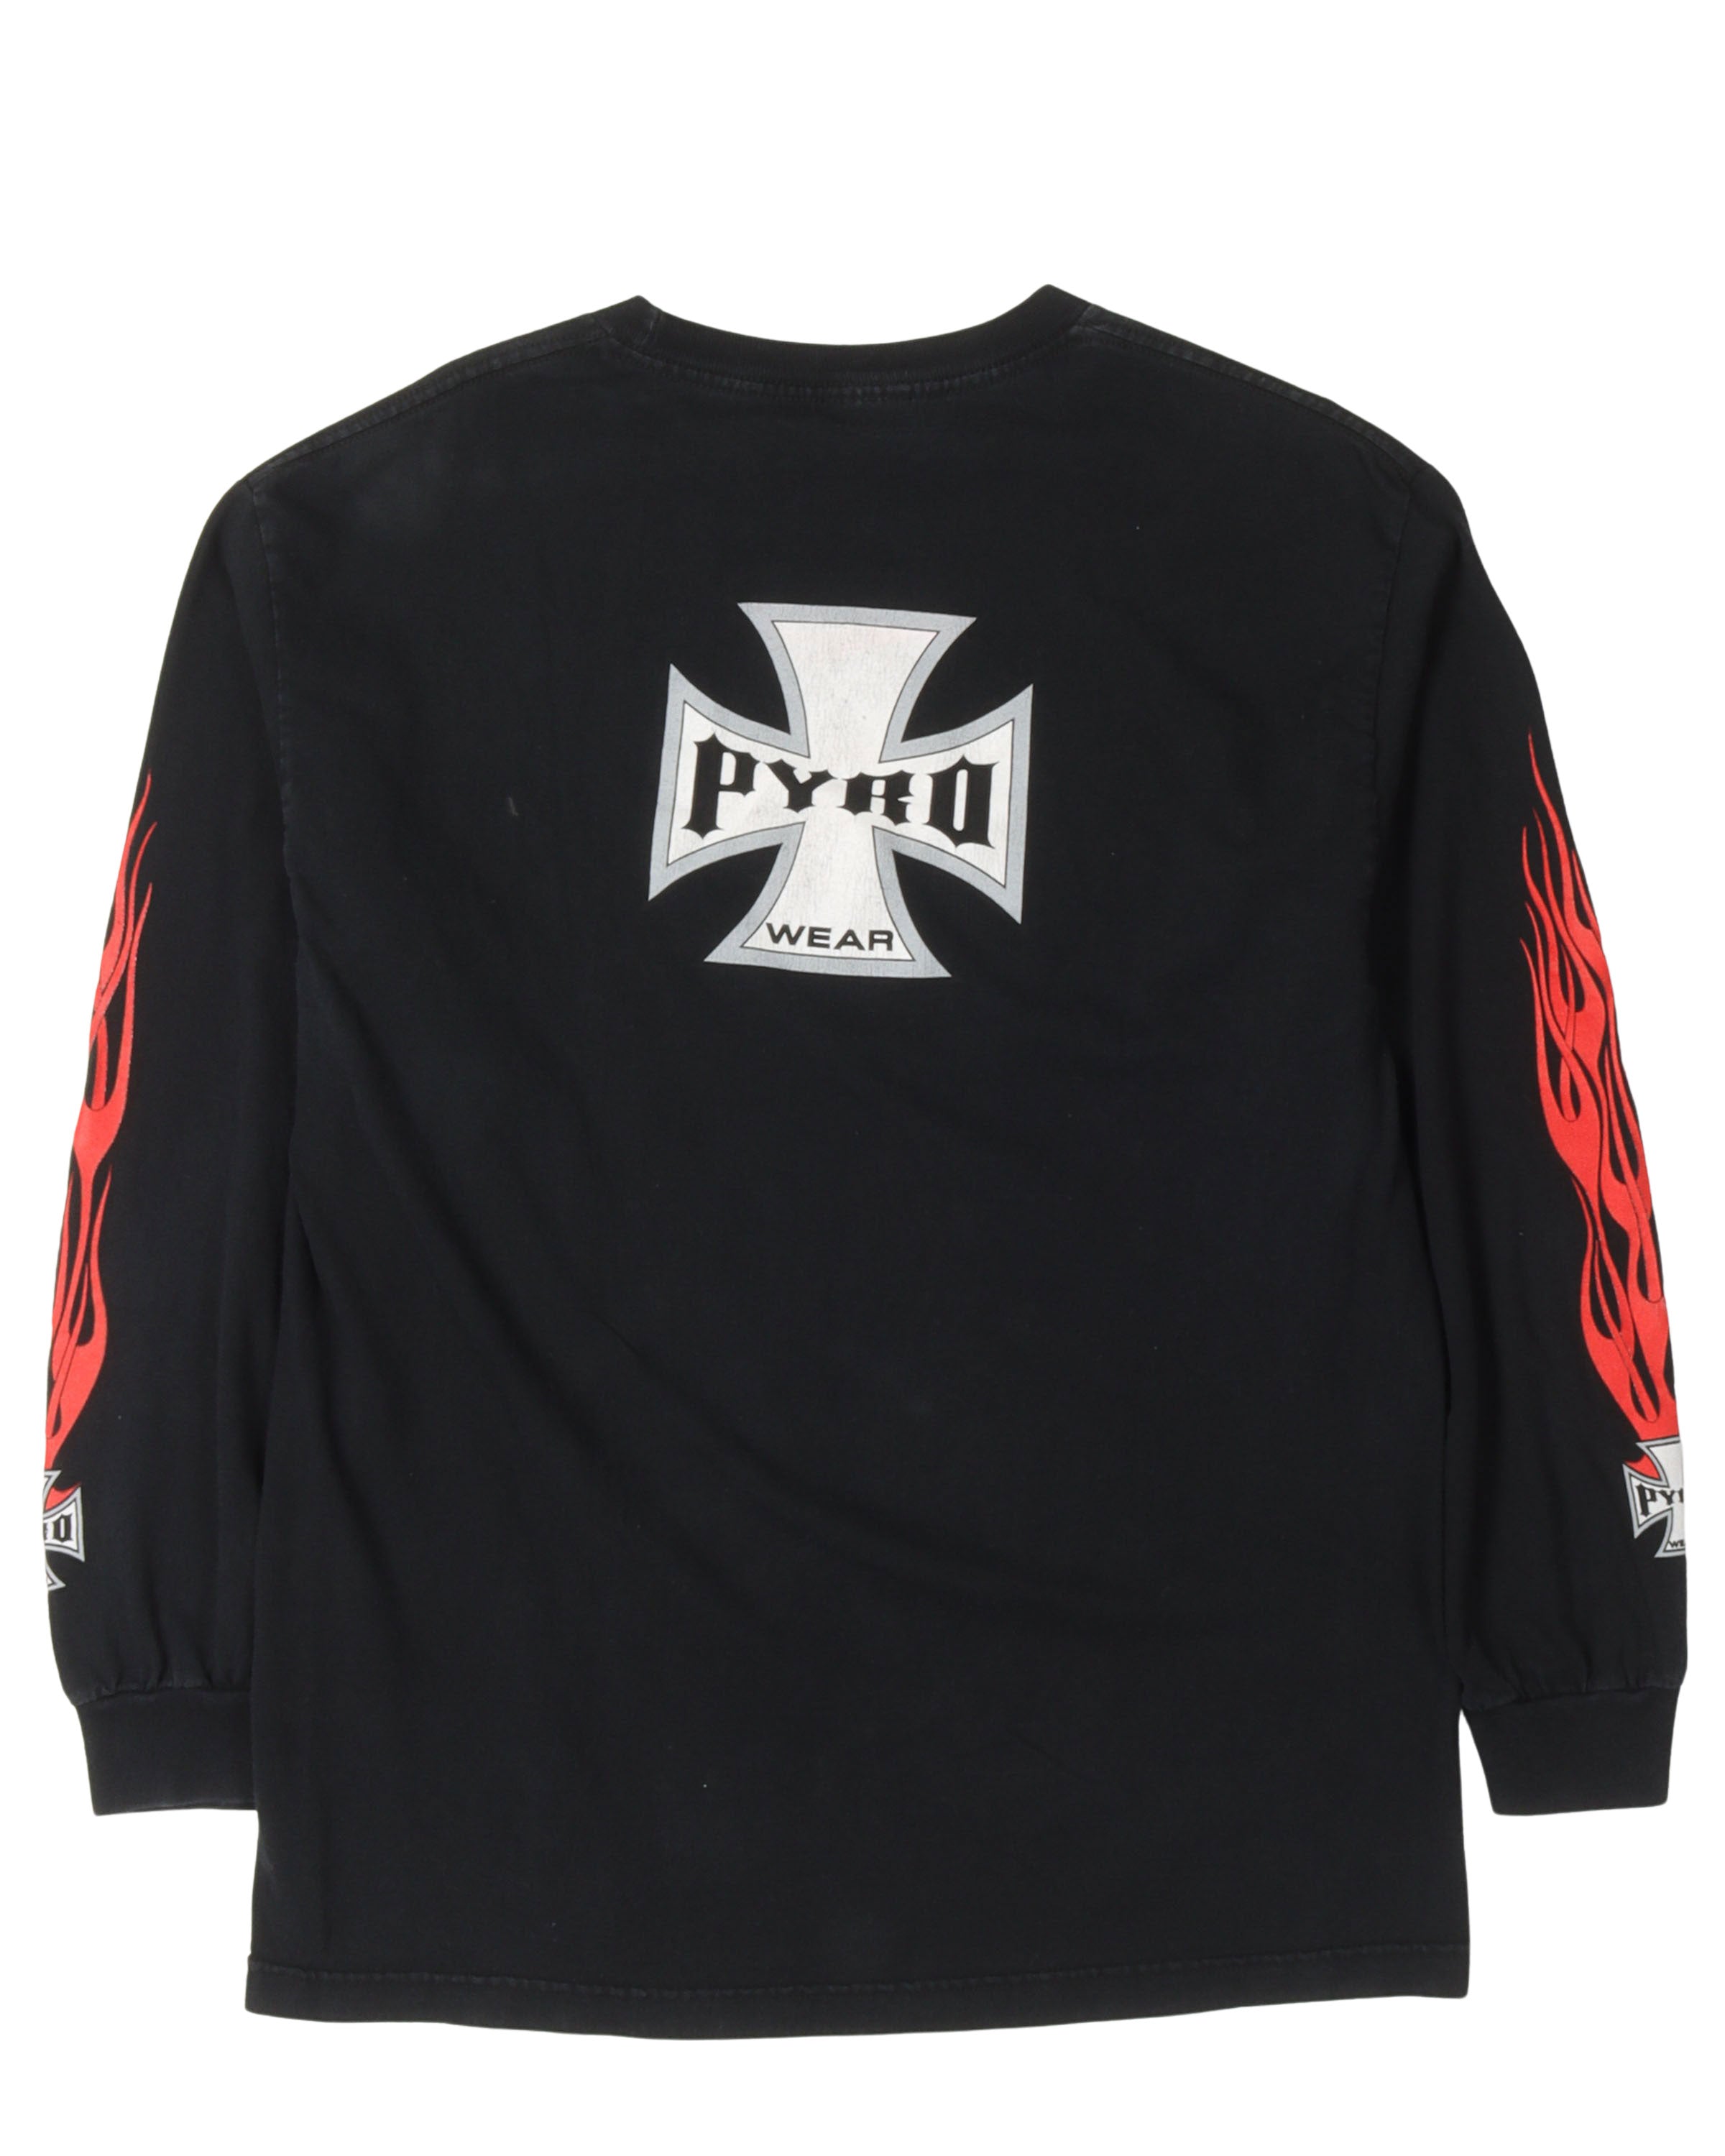 Pyro Wear Iron Cross Long Sleeve T-Shirt